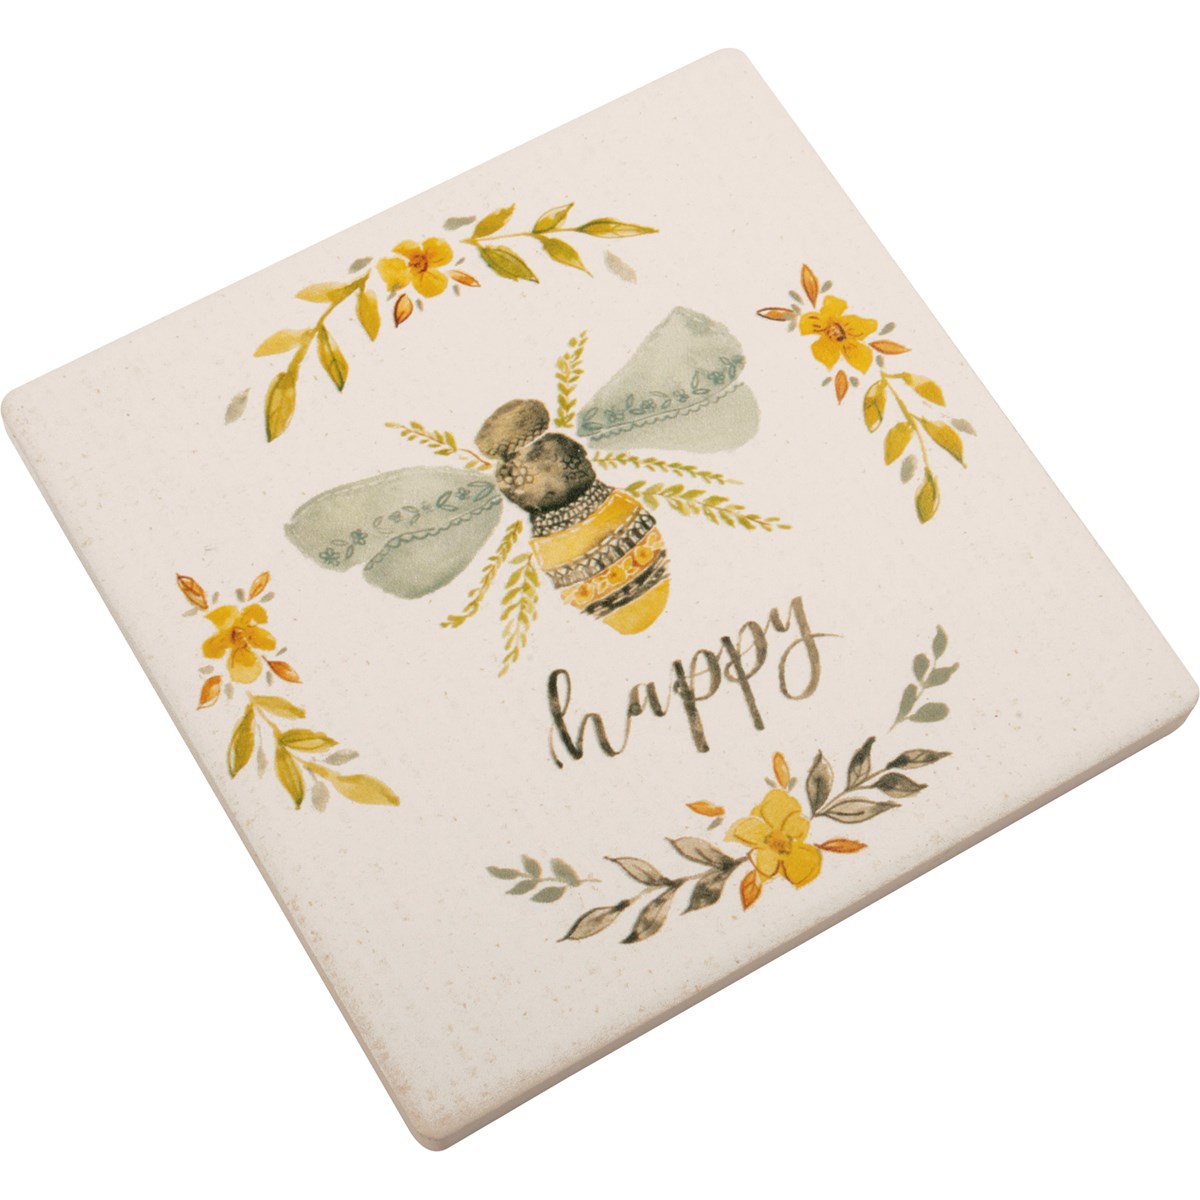 Bee Happy Coaster - Stone, Cork